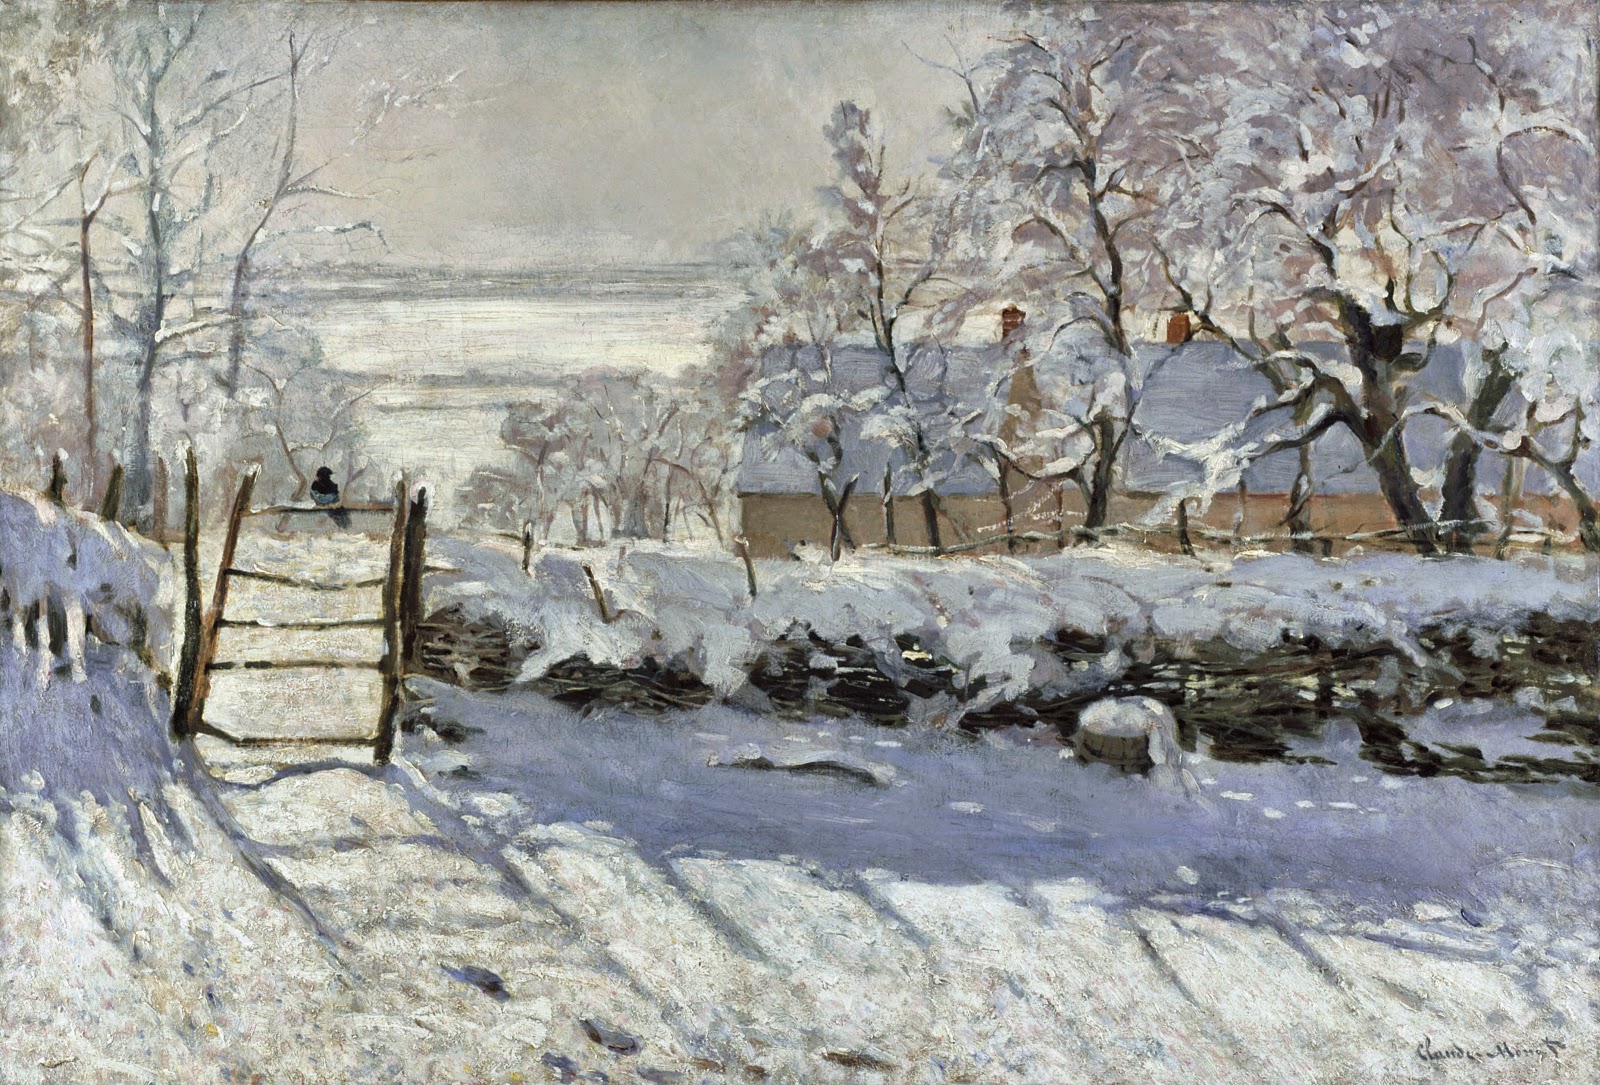 Claude+Monet-1840-1926 (69).jpg